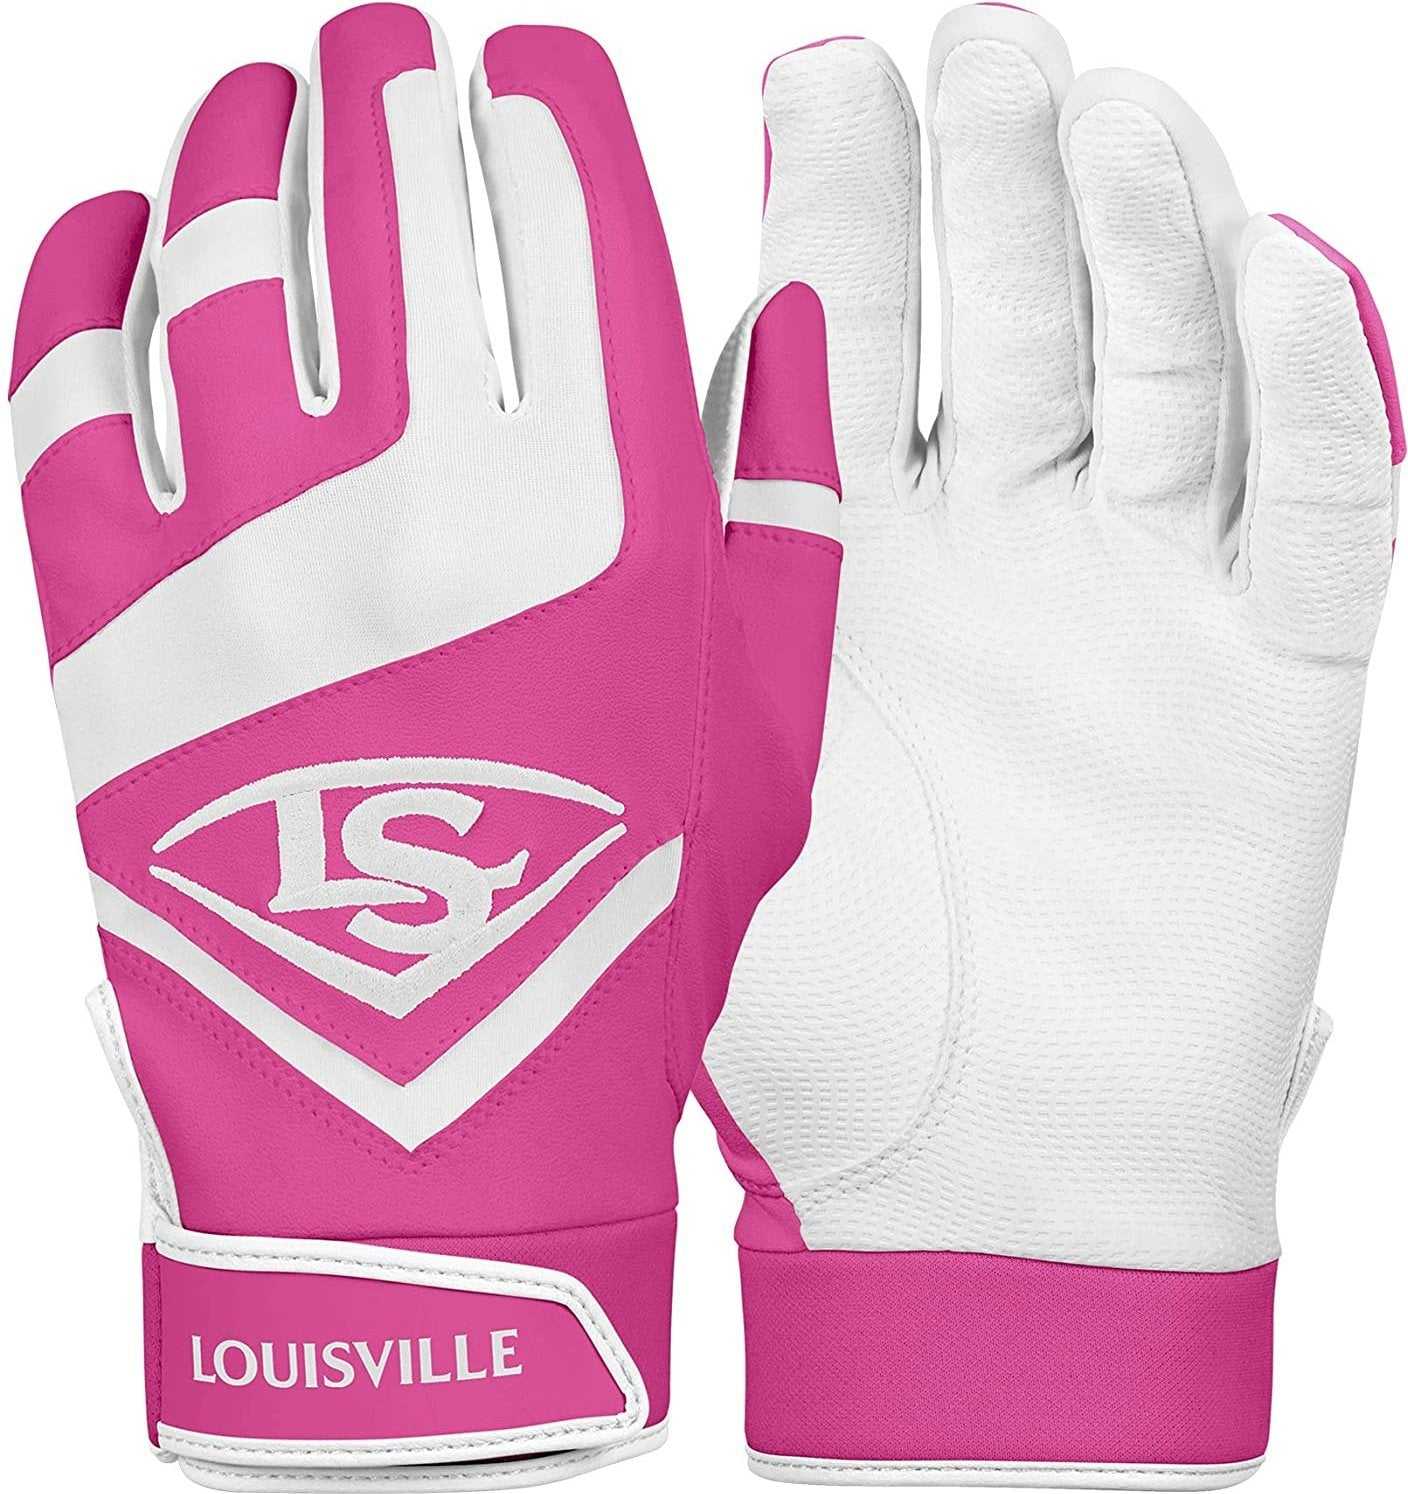 Louisville Slugger Genuine Batting Gloves - Pink - HIT A Double